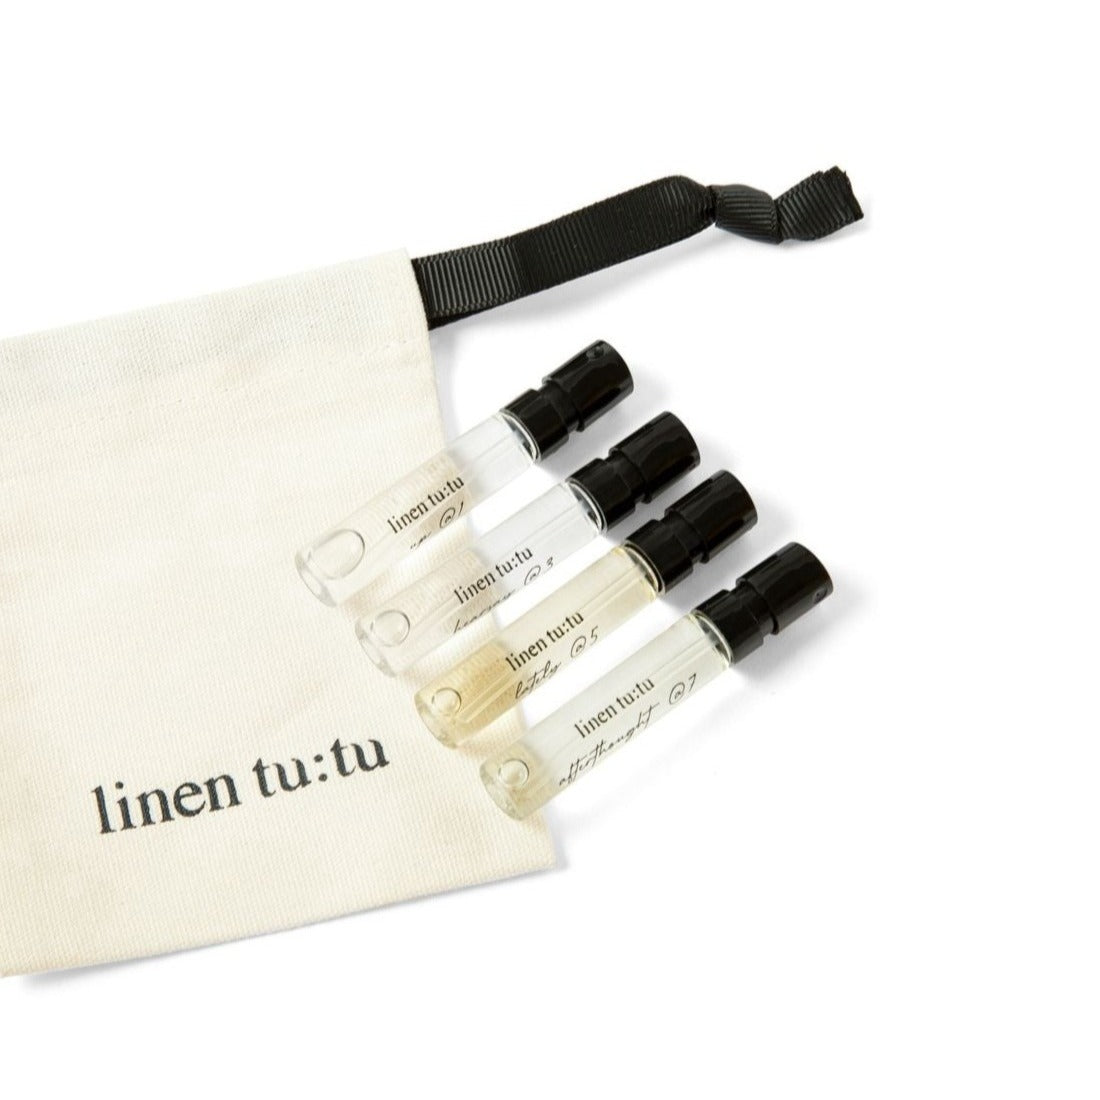 Linen Tutu natural perfume discovery set